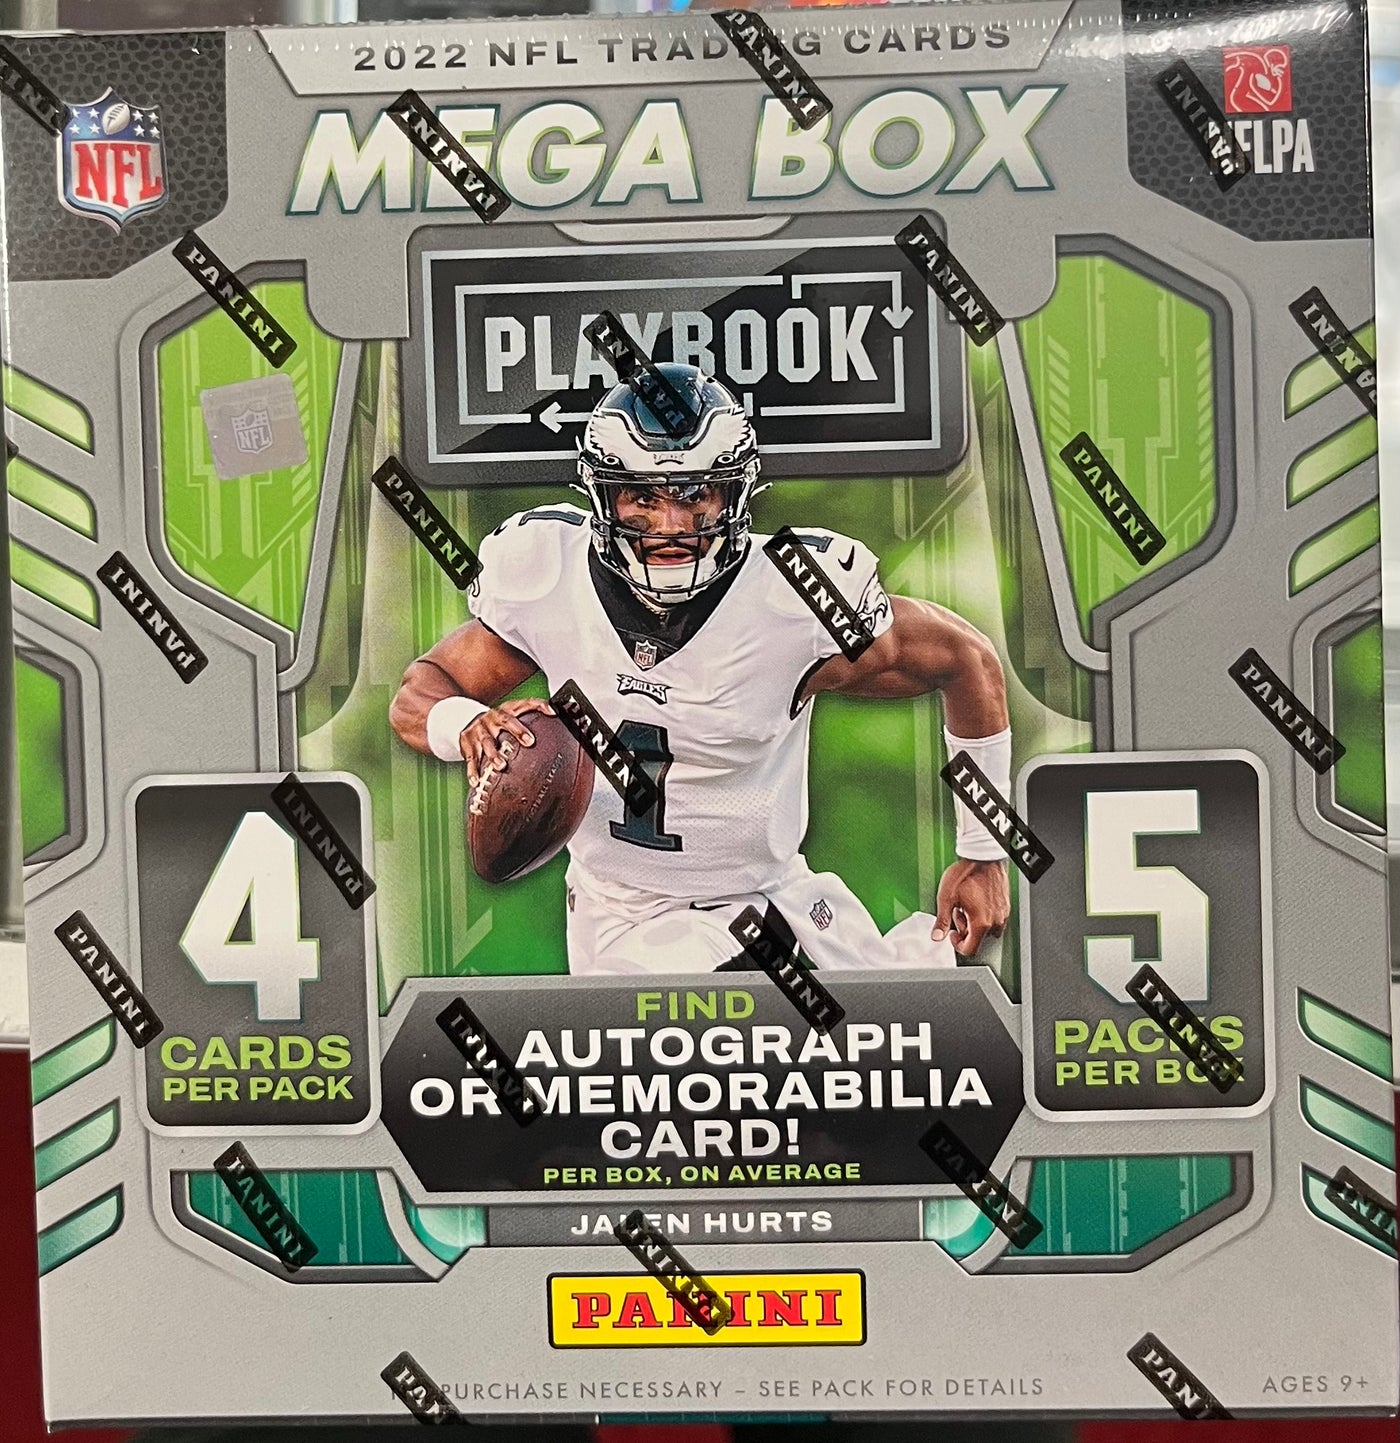 2022 Playbook Football Mega Box